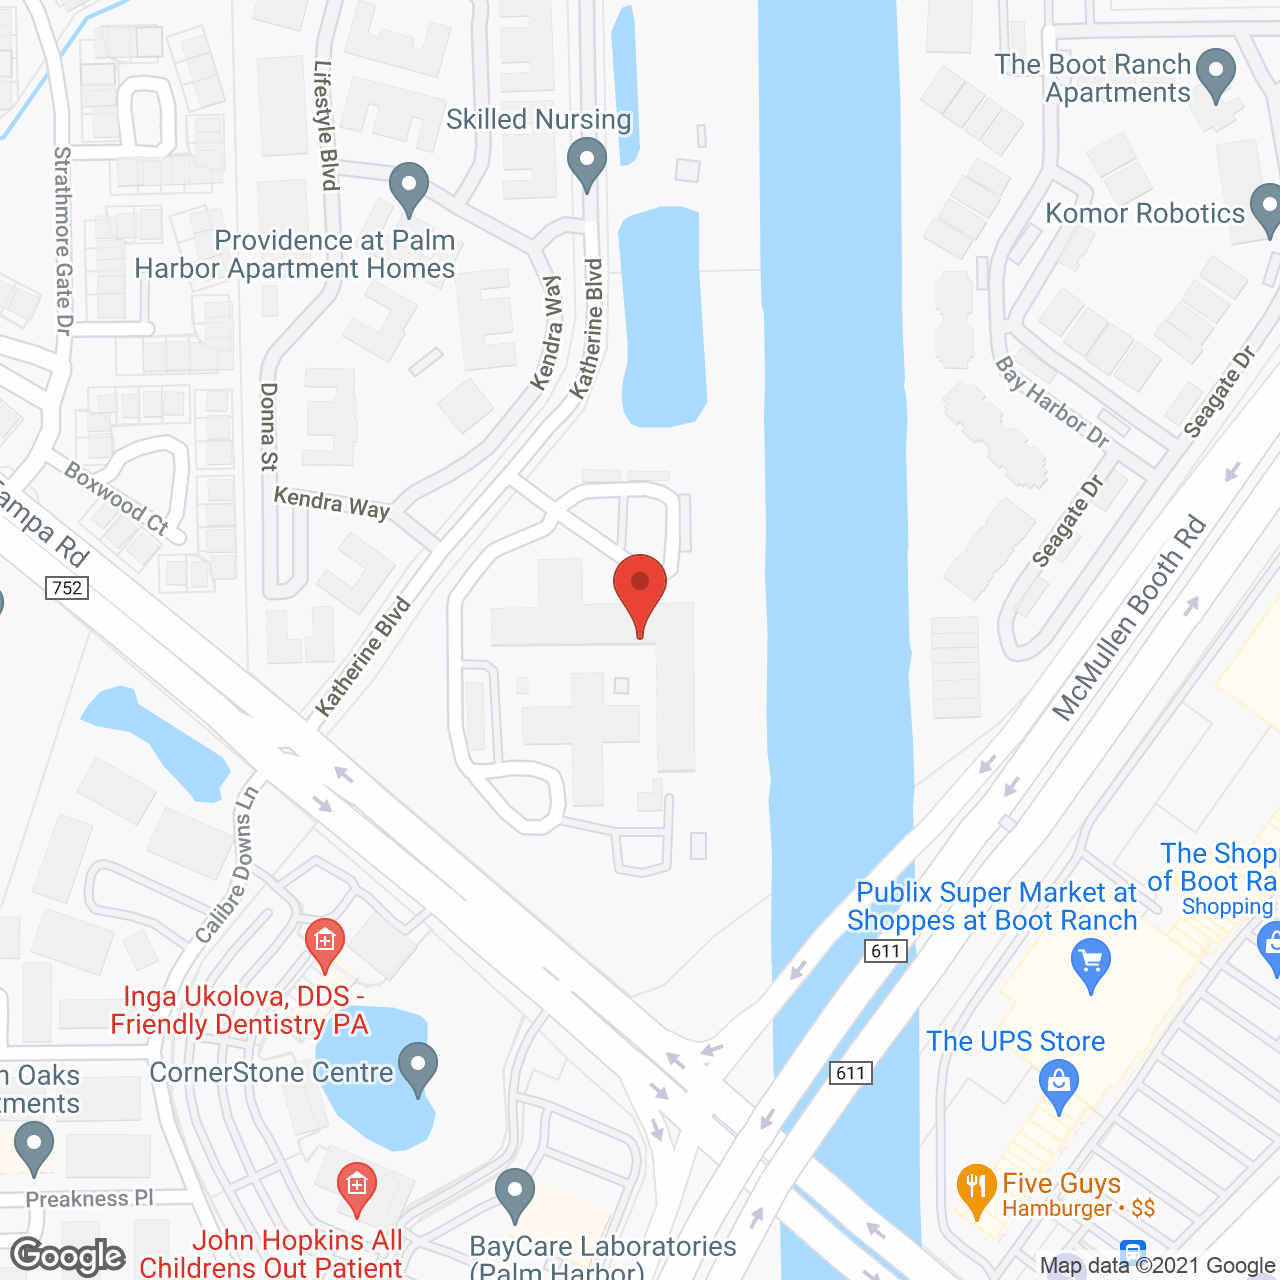 Stratford Court in google map